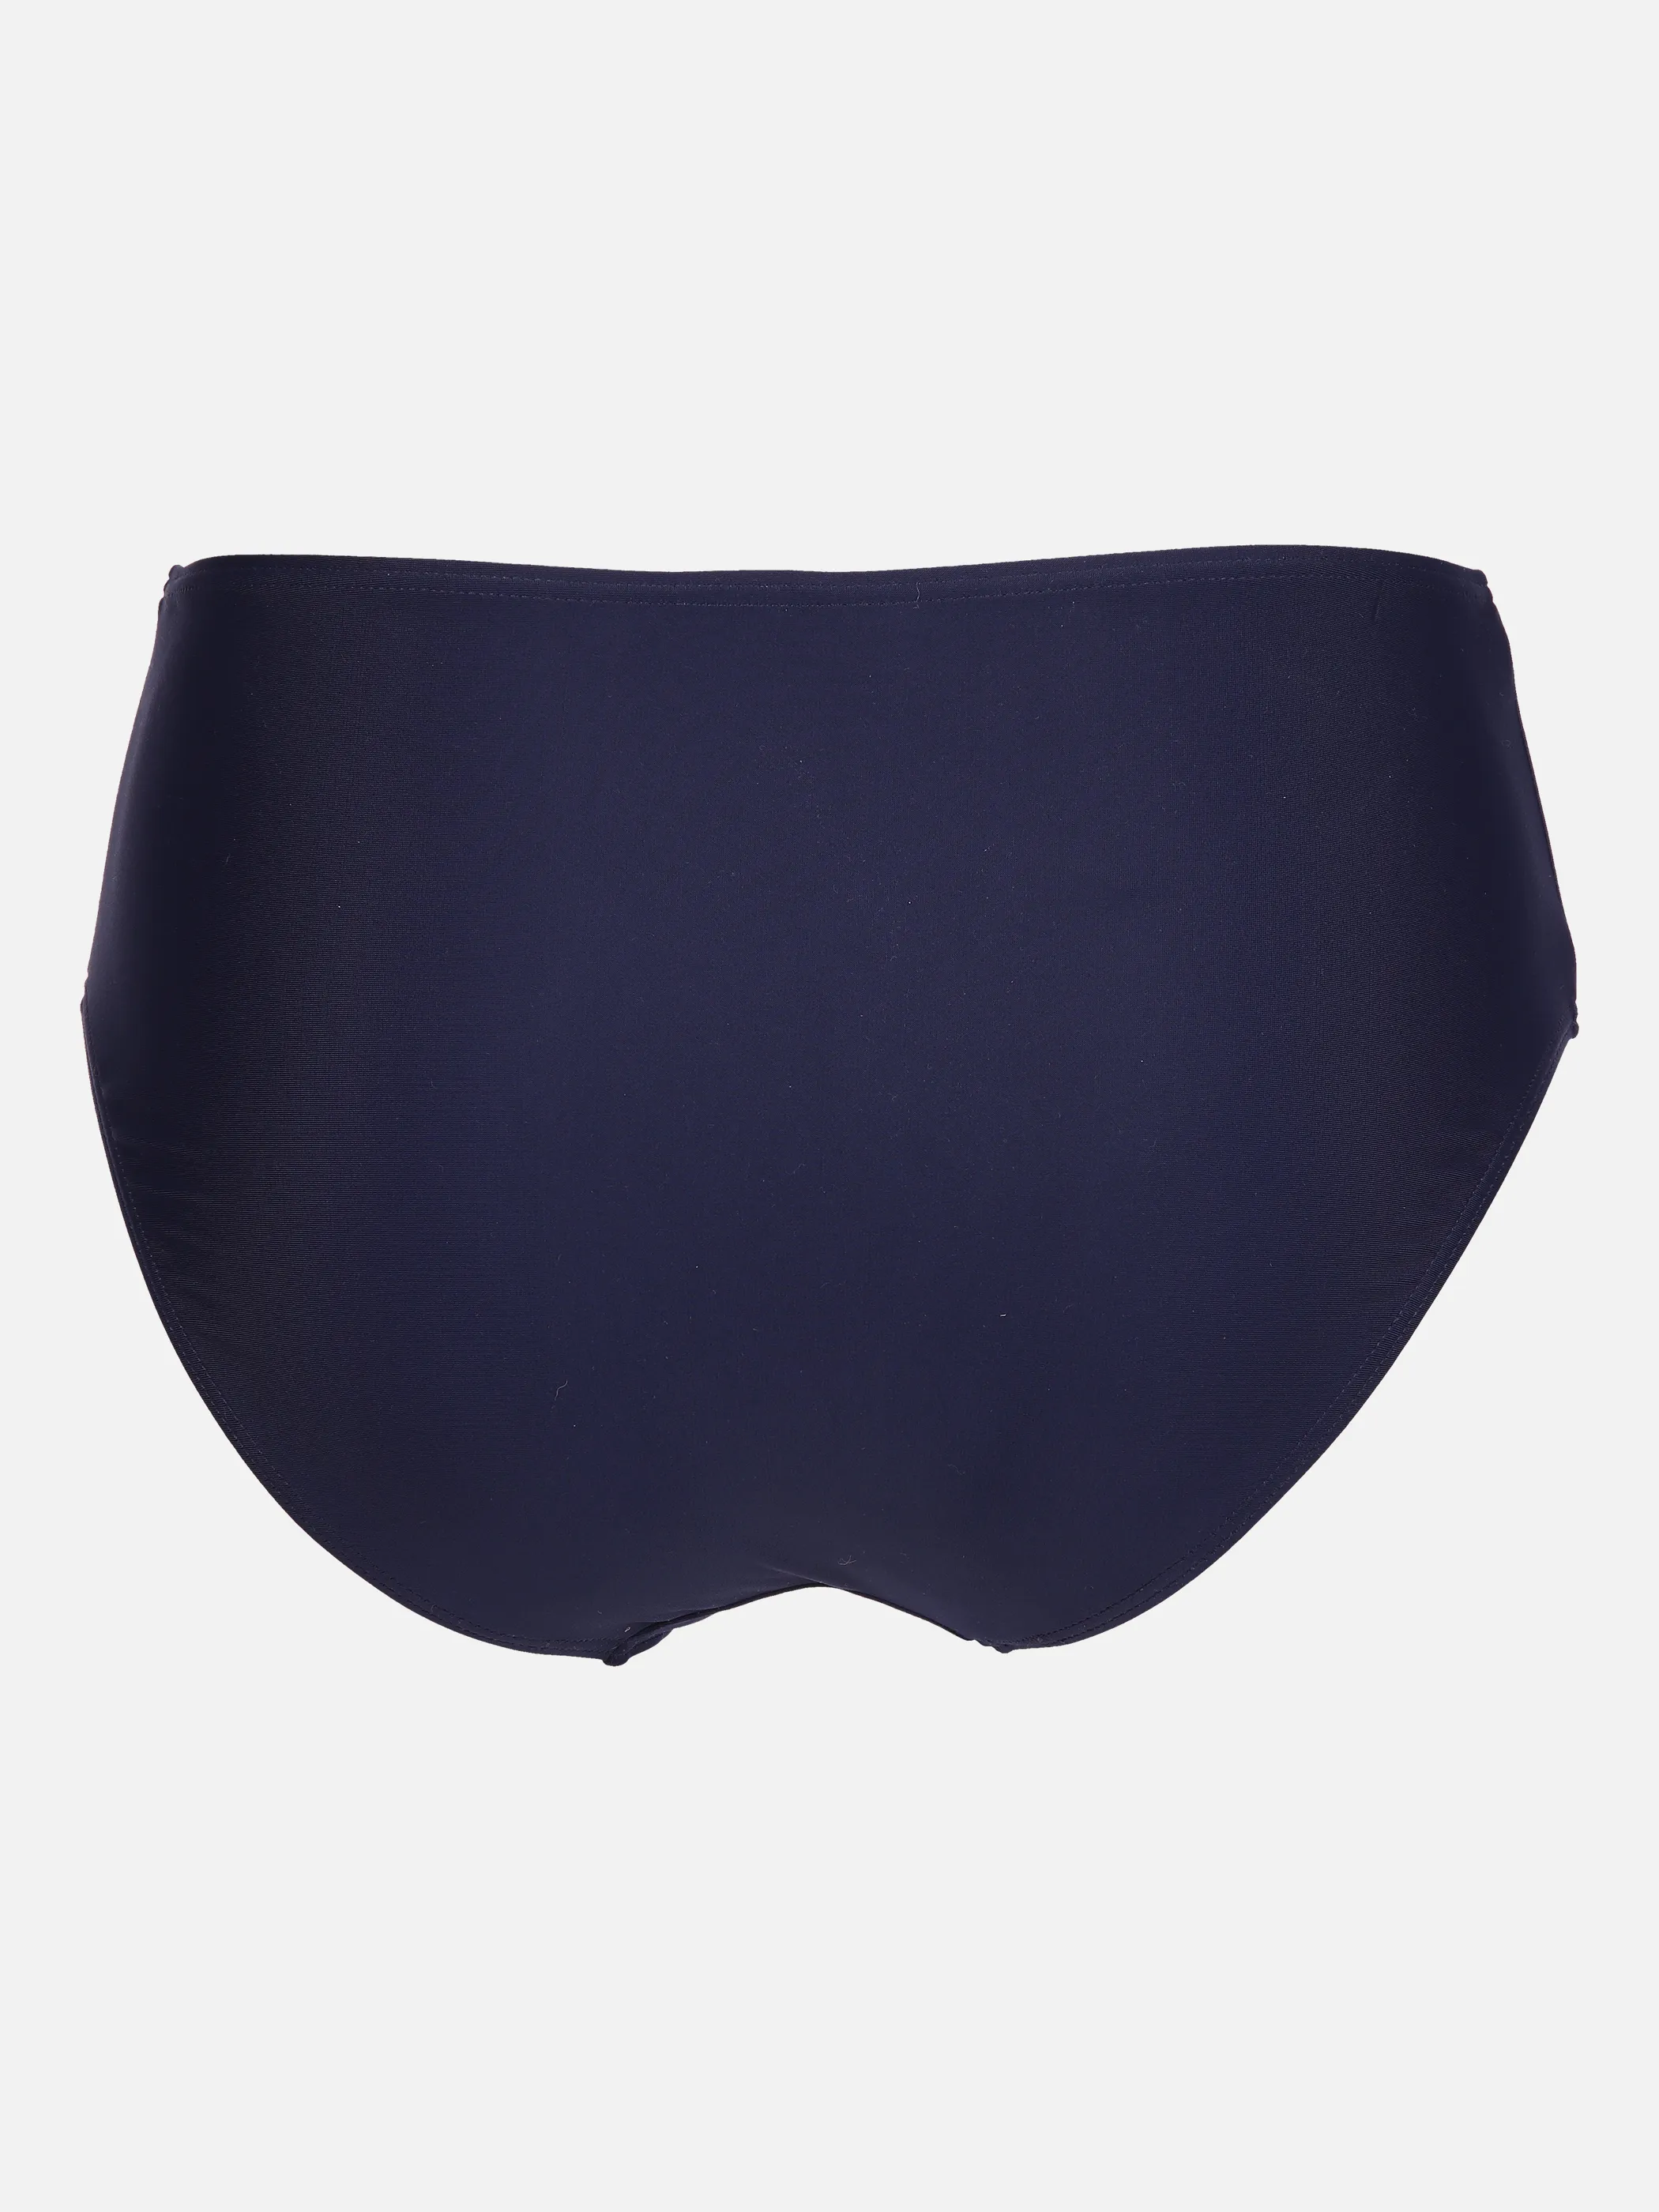 Grinario Sports Da-Bikini-Hose Blau 863019 NAVY NAVY 2